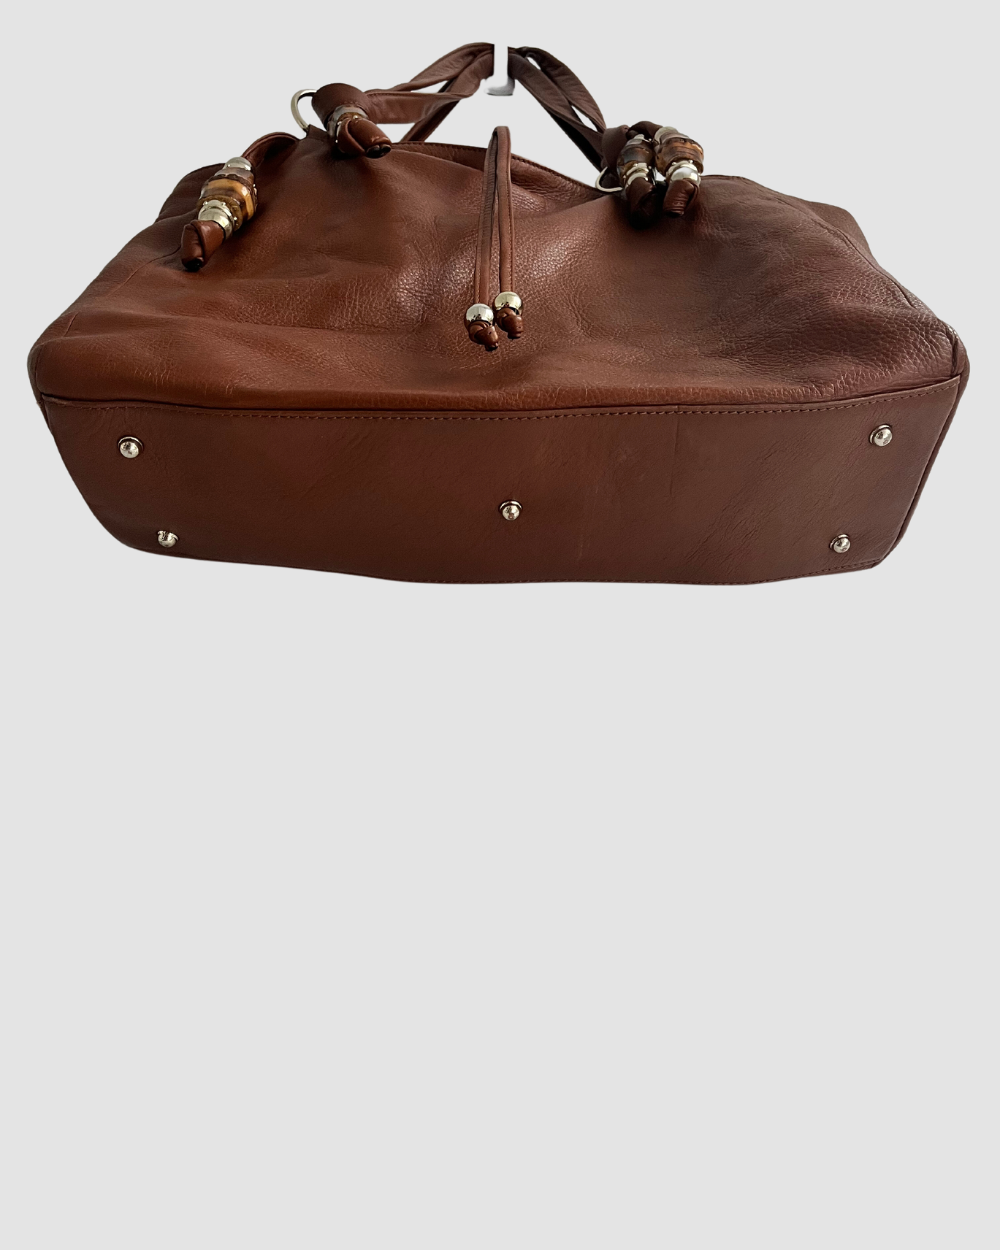 Gucci Brown Leather Tassel Bag